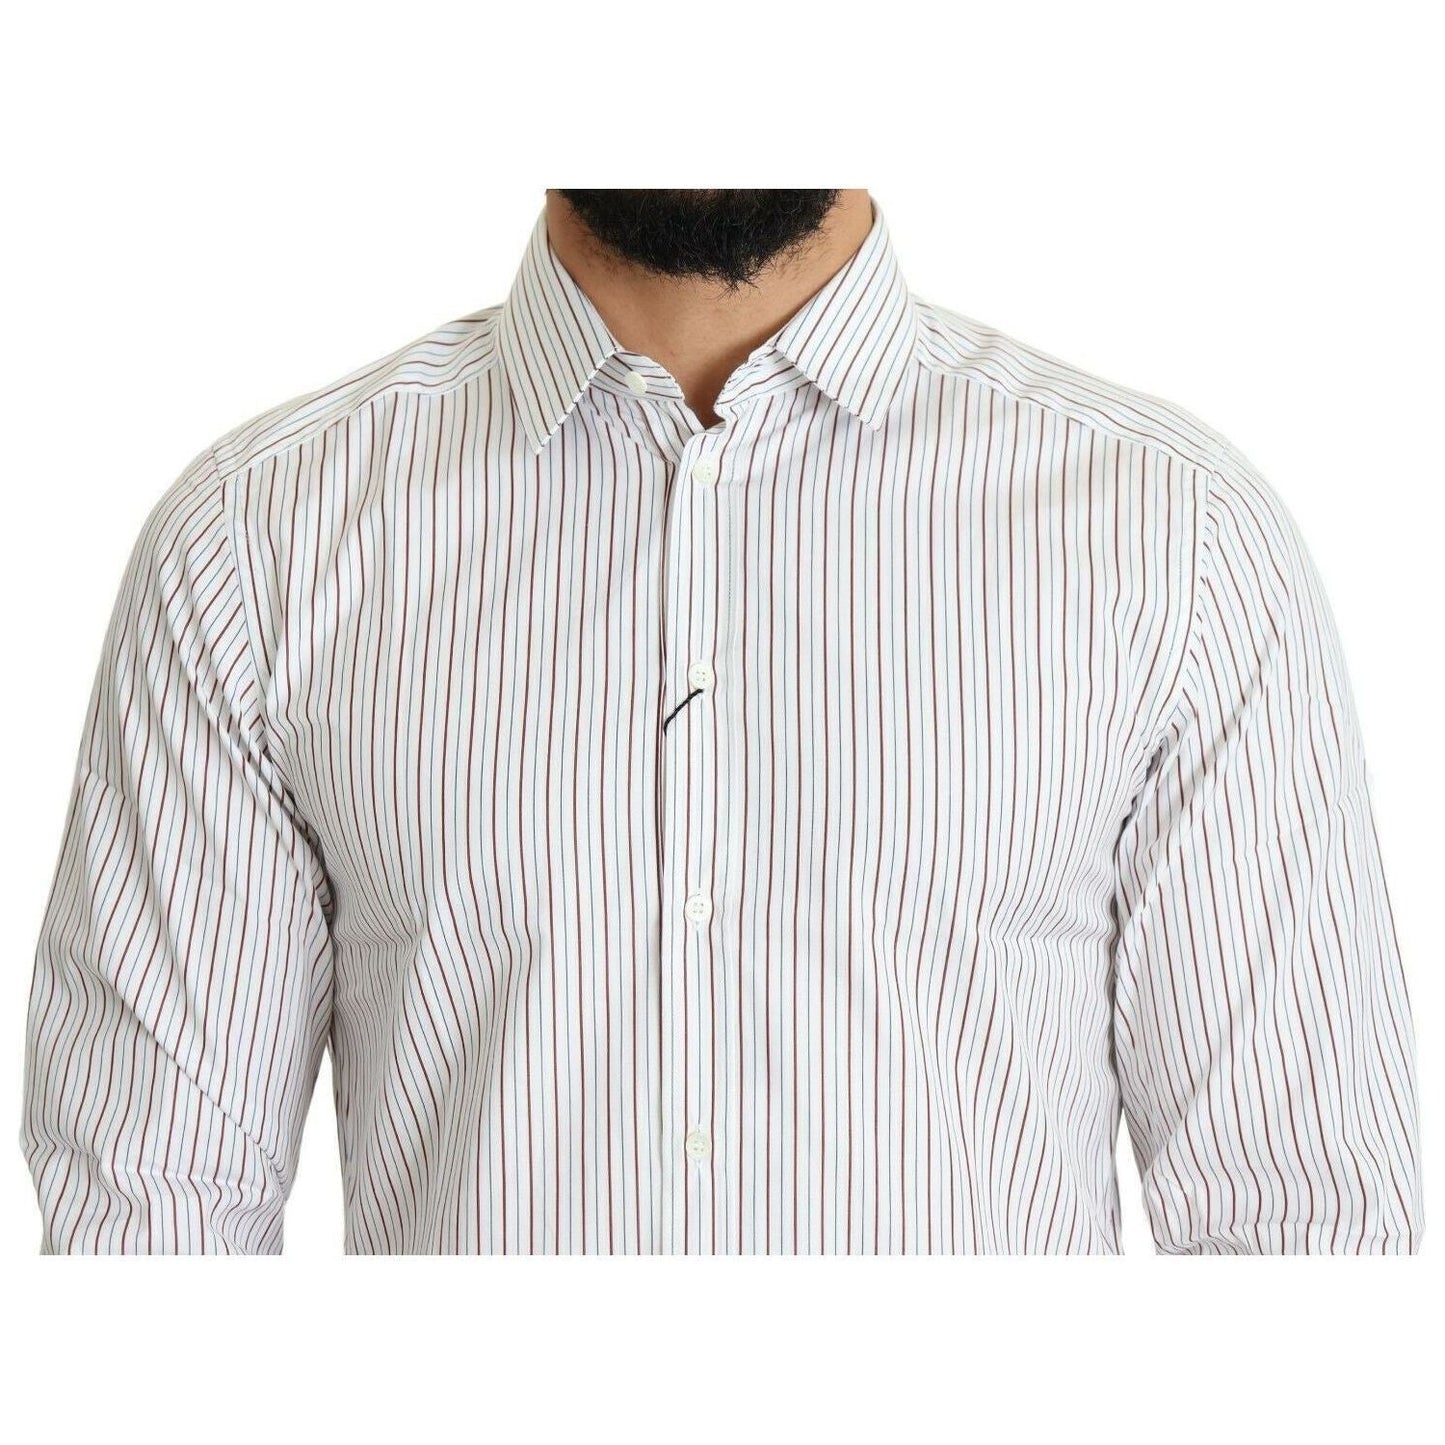 Dolce & Gabbana Elegant White Striped Cotton Dress Shirt white-striped-formal-martini-shirt